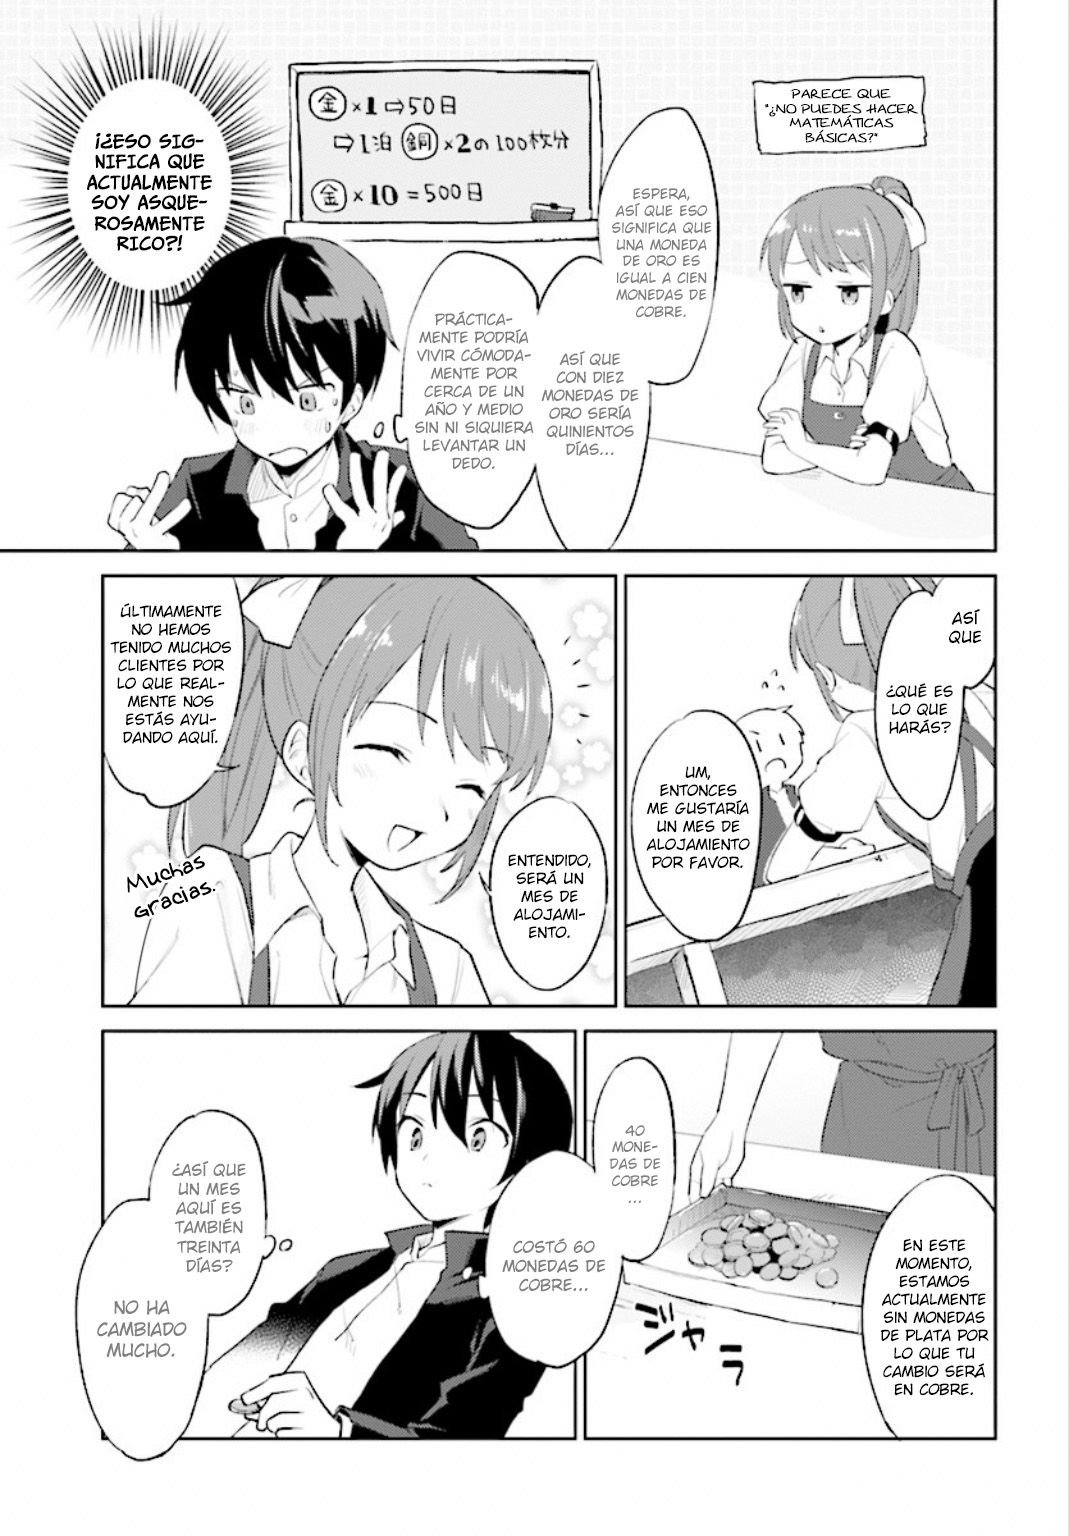 Isekai wa Smartphone to Tomo ni. - Página 9 - Mangás, Light novels